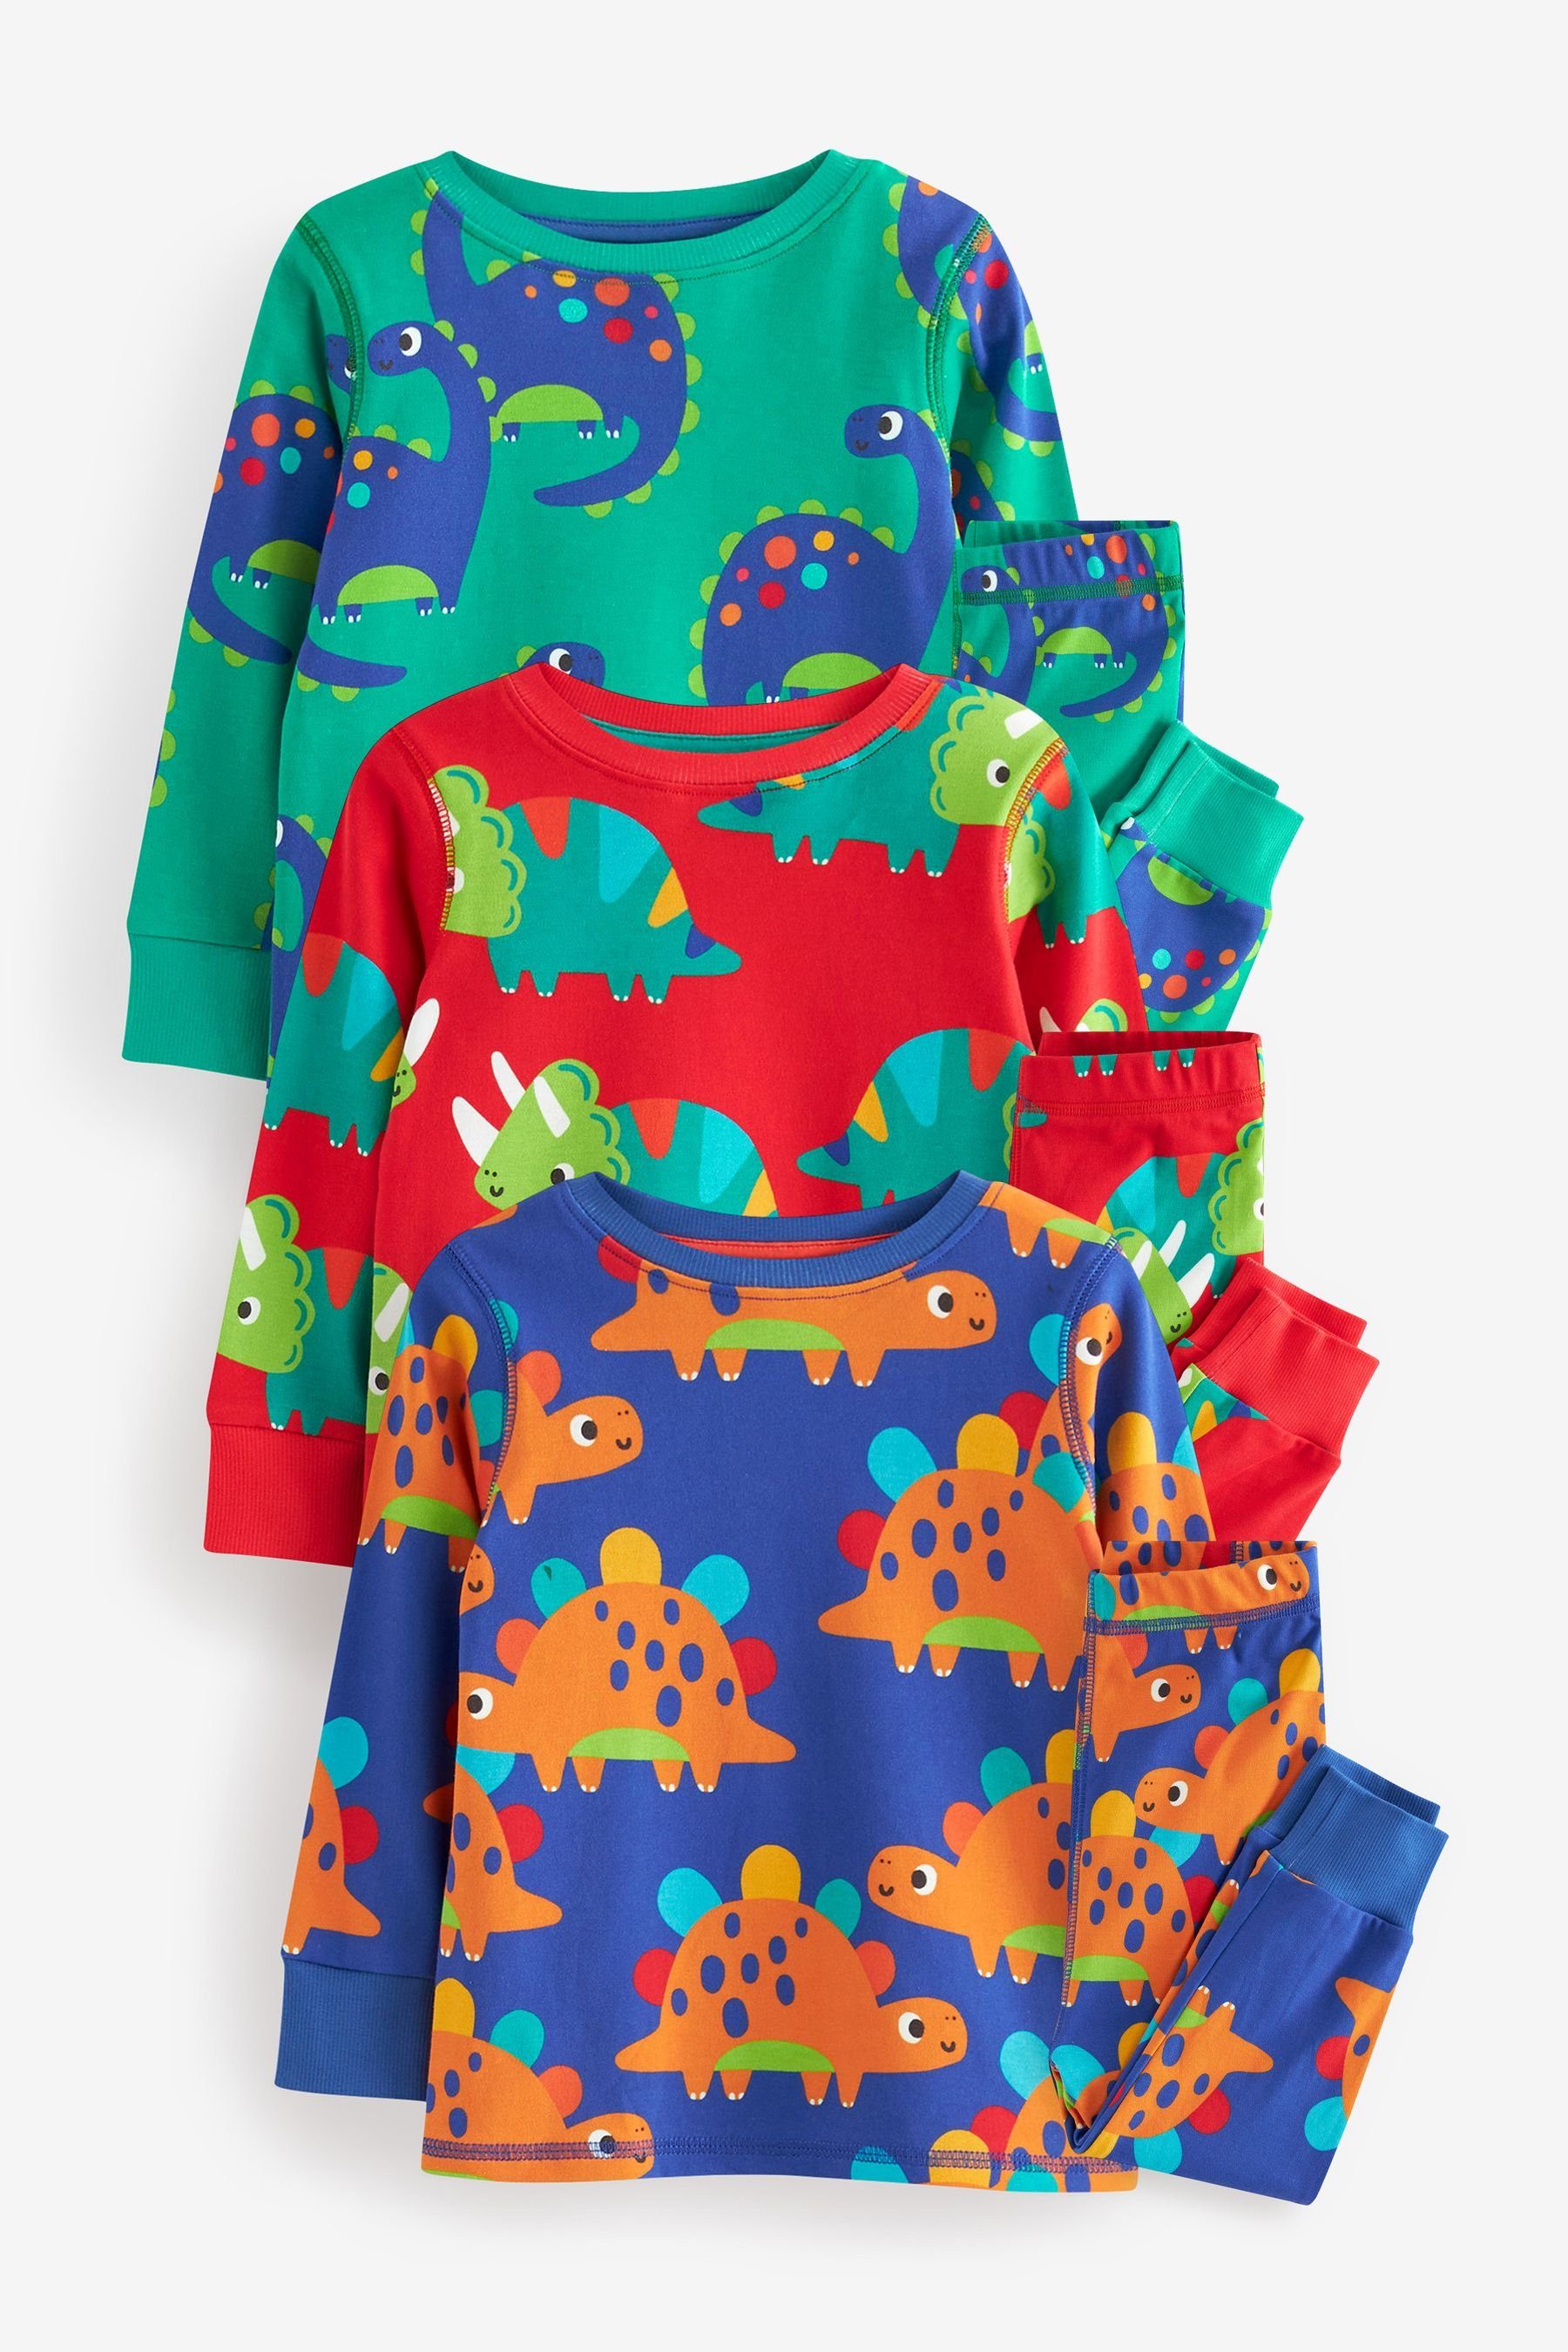 Next Pyjama Red/Blue/Green Snuggle tlg) Dinosaur (6 Schlafanzüge 3er-Pack